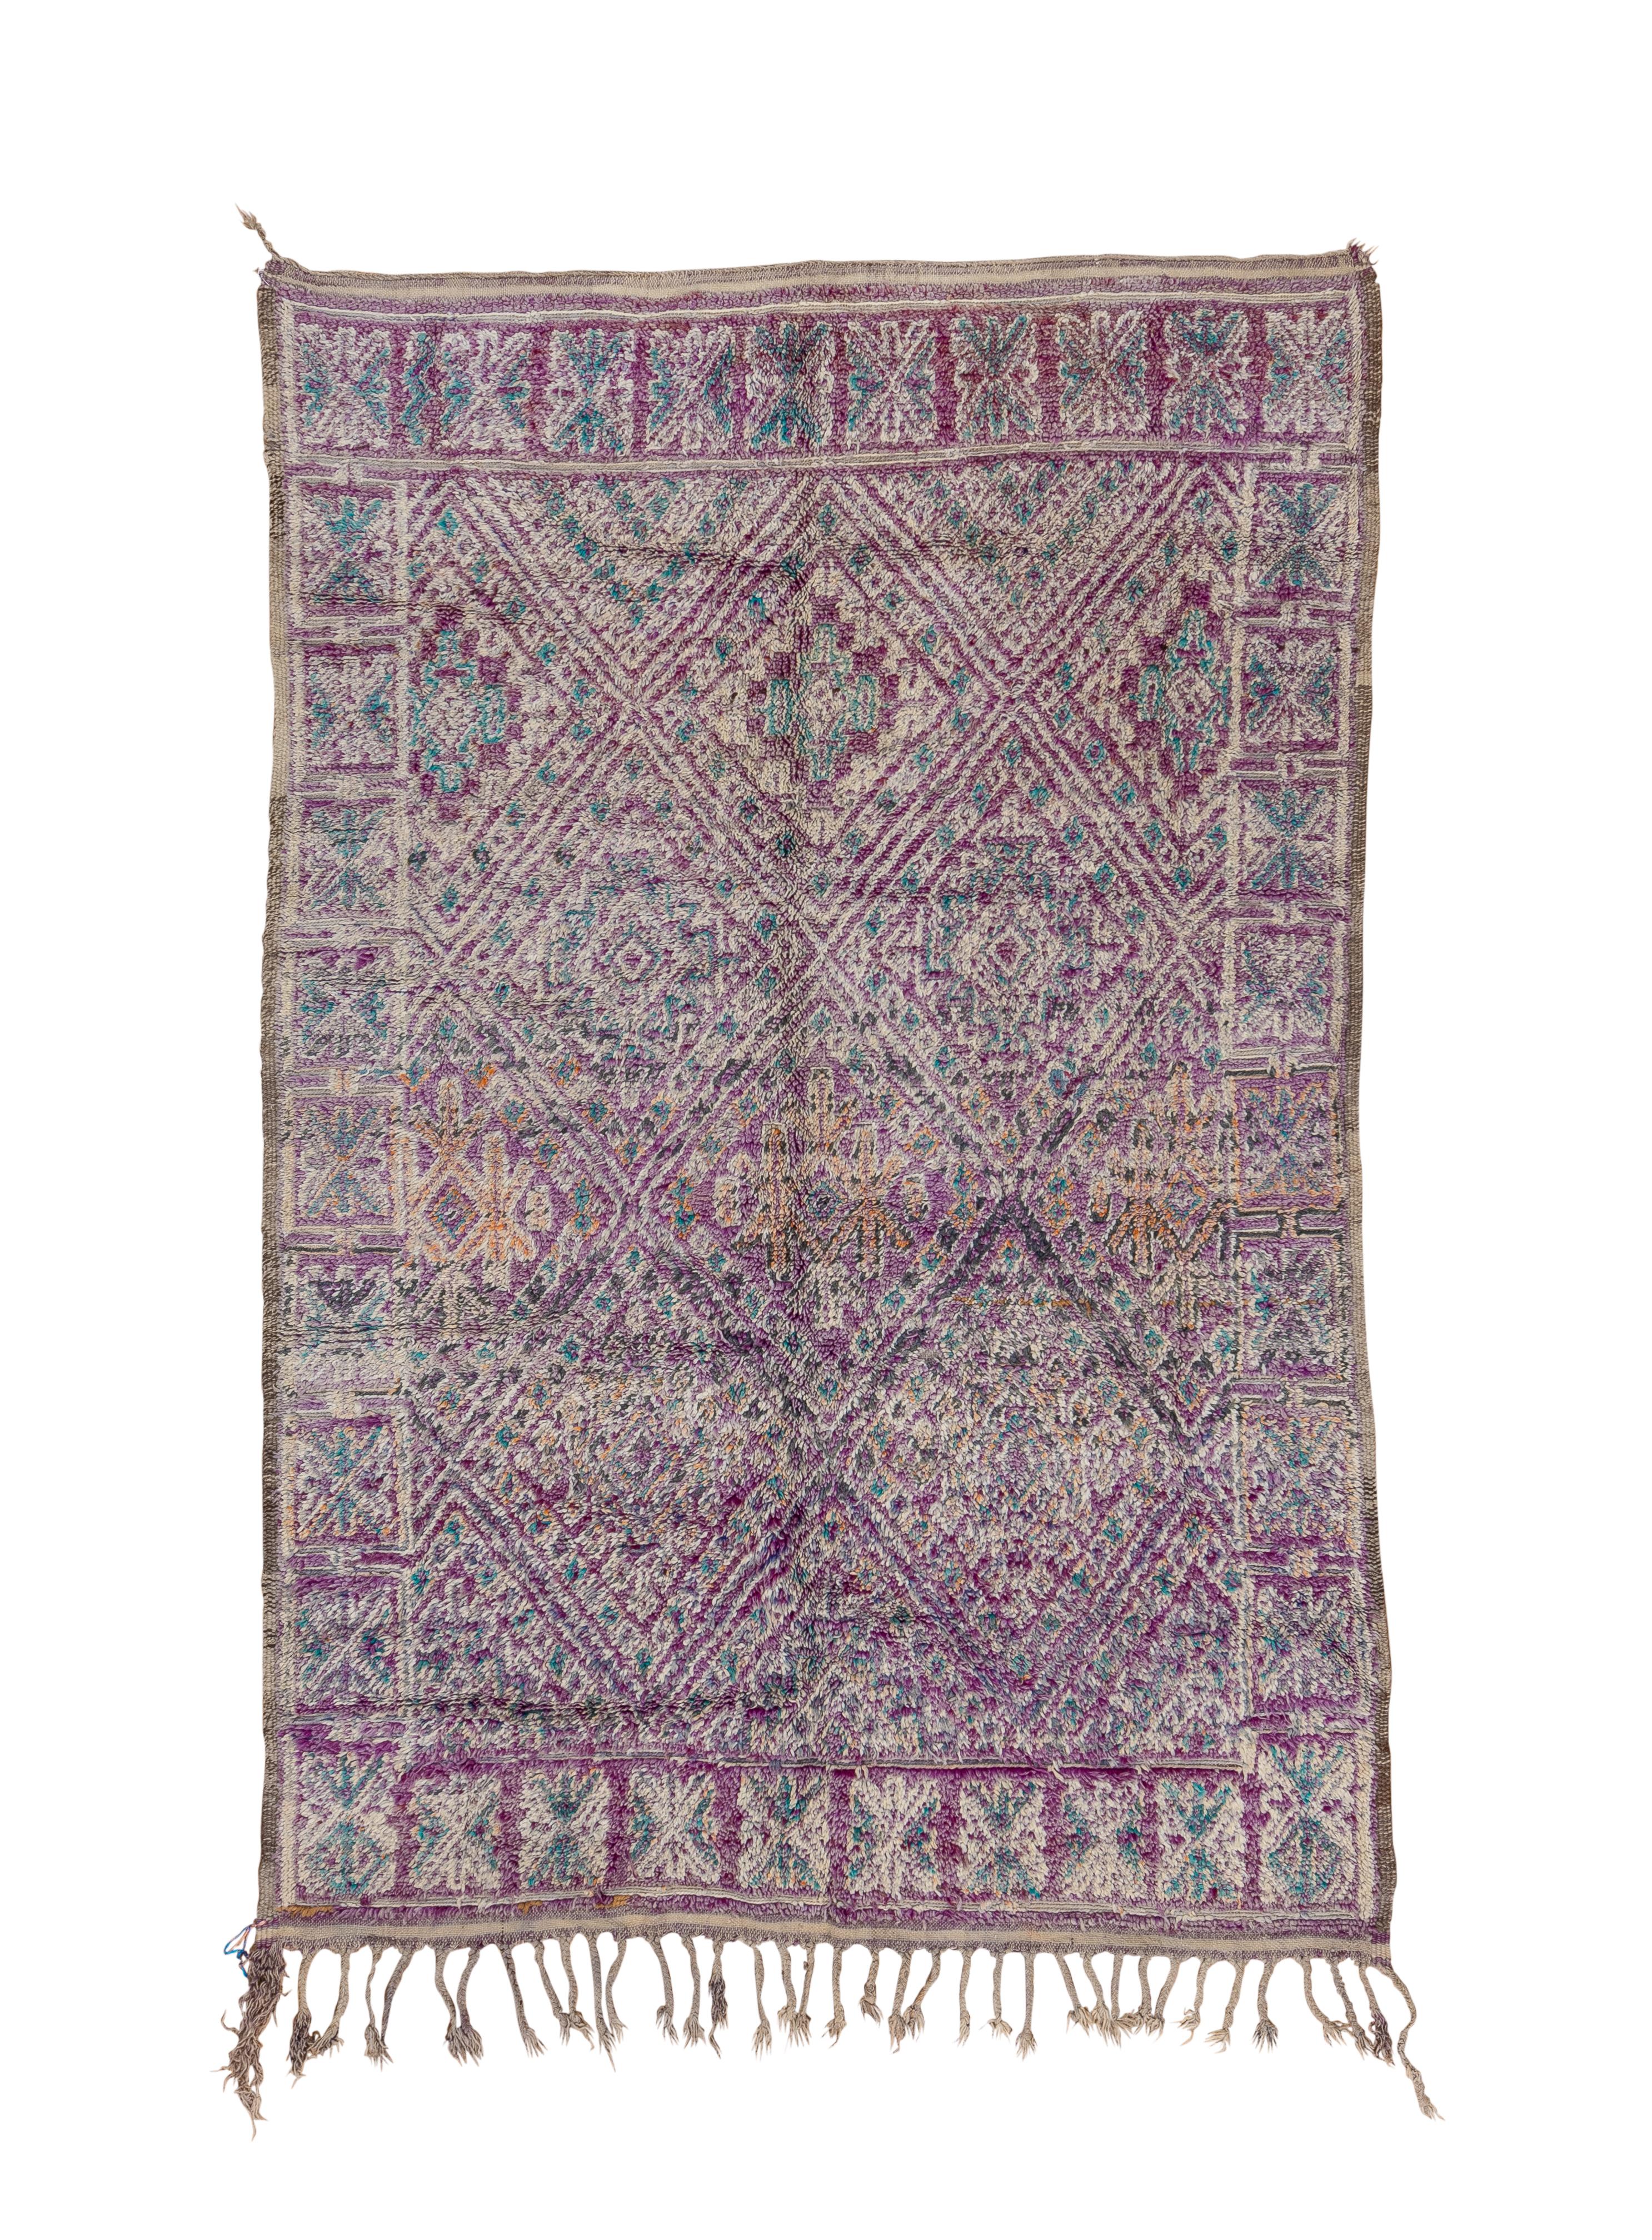 Modern plush handwoven rug with geometric center motifs.
Morocco circa 1940s

Rug Measures
4'9x7'6.